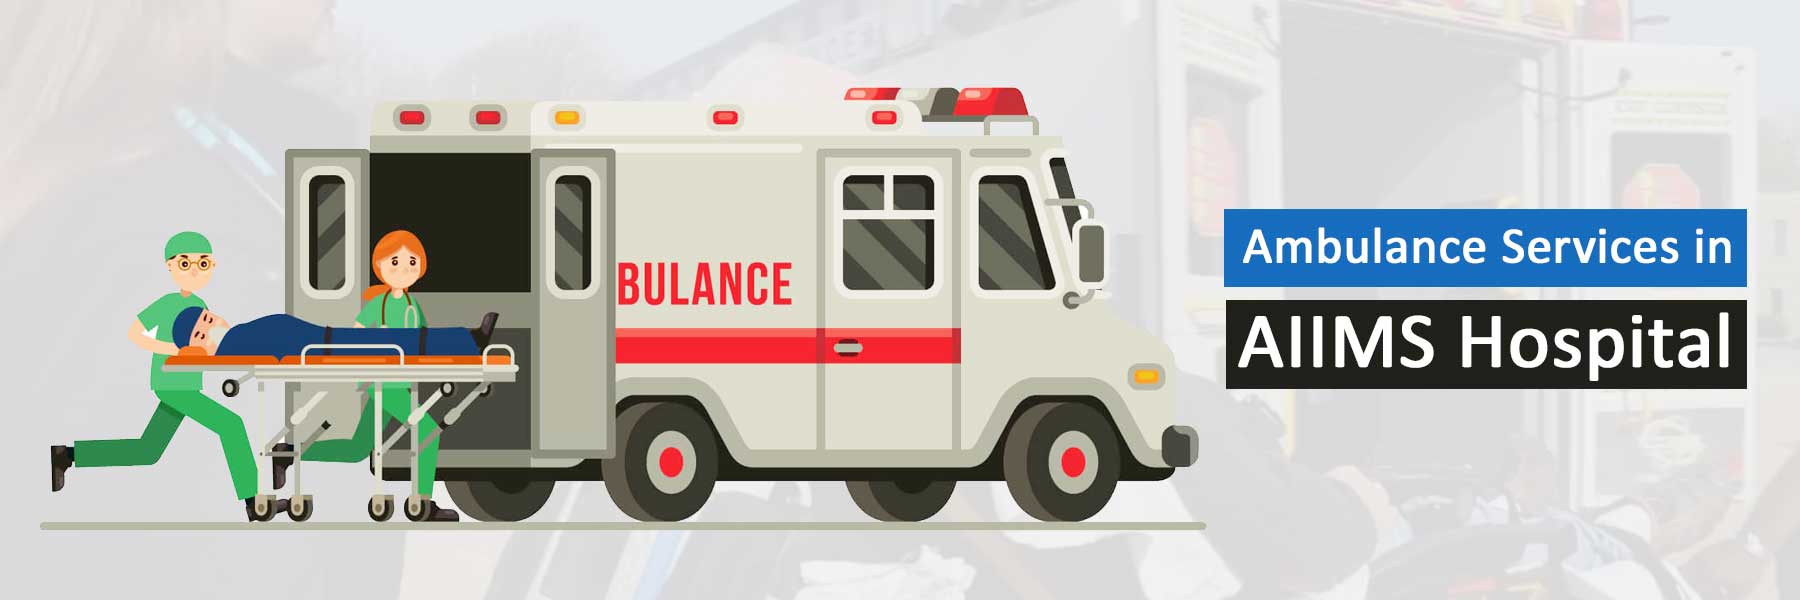 Cardiac Ambulance Services in Delhi - Life Express